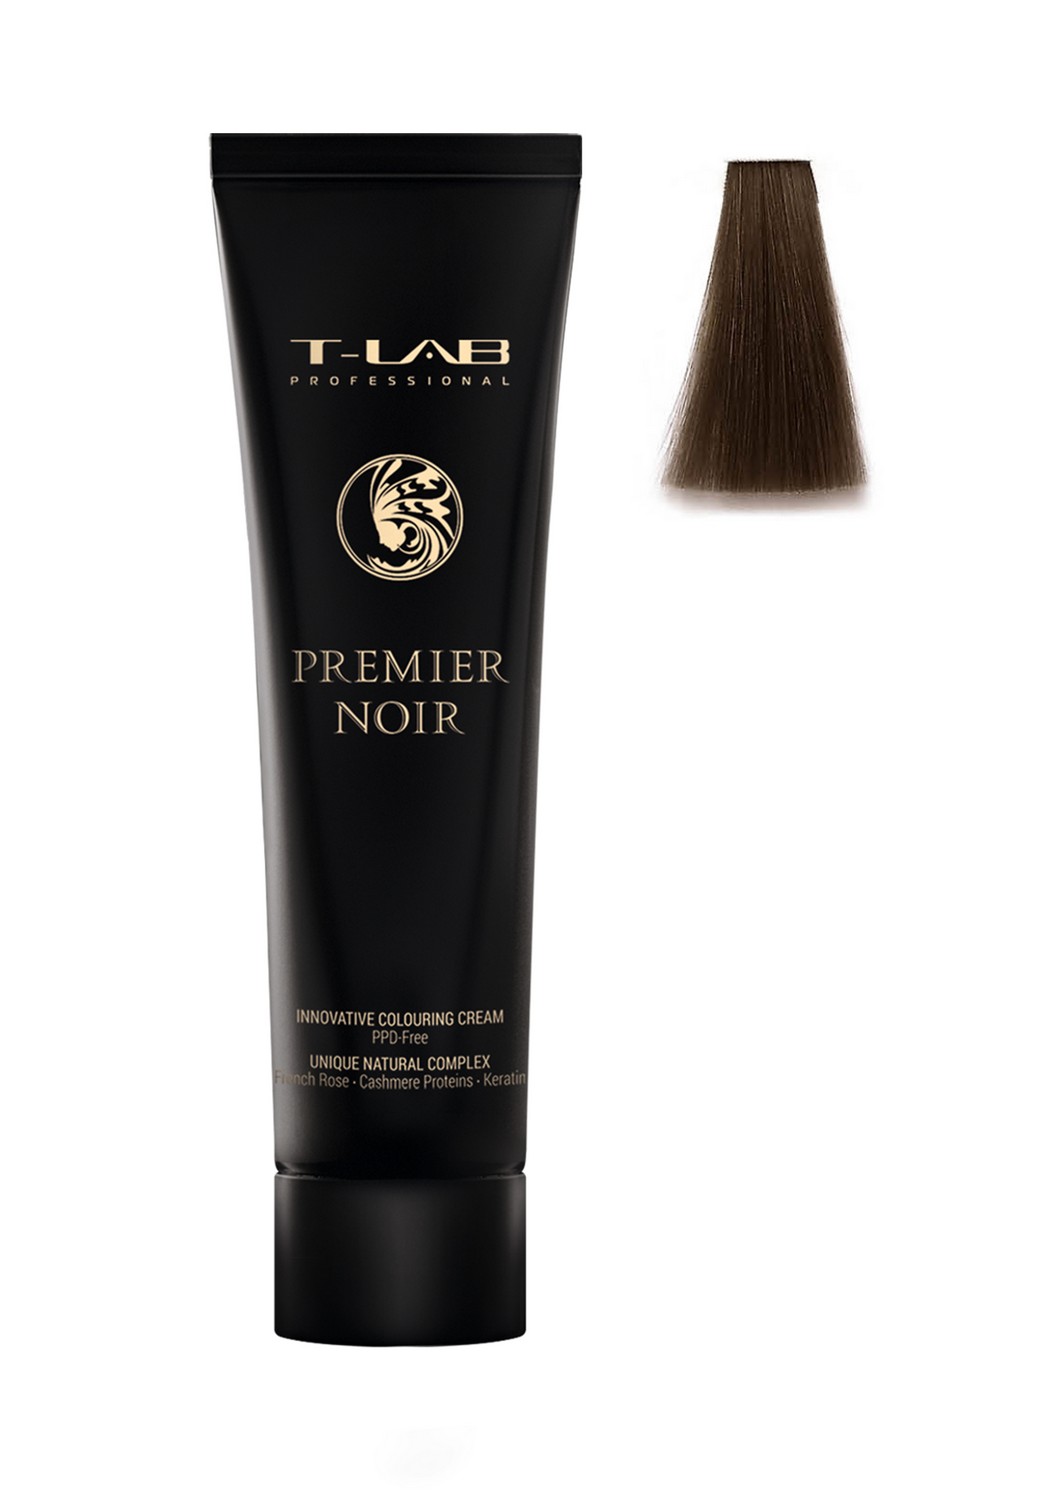 Крем-краска T-LAB Professional Premier Noir colouring cream, оттенок 4.0 (natural brown) - фото 2